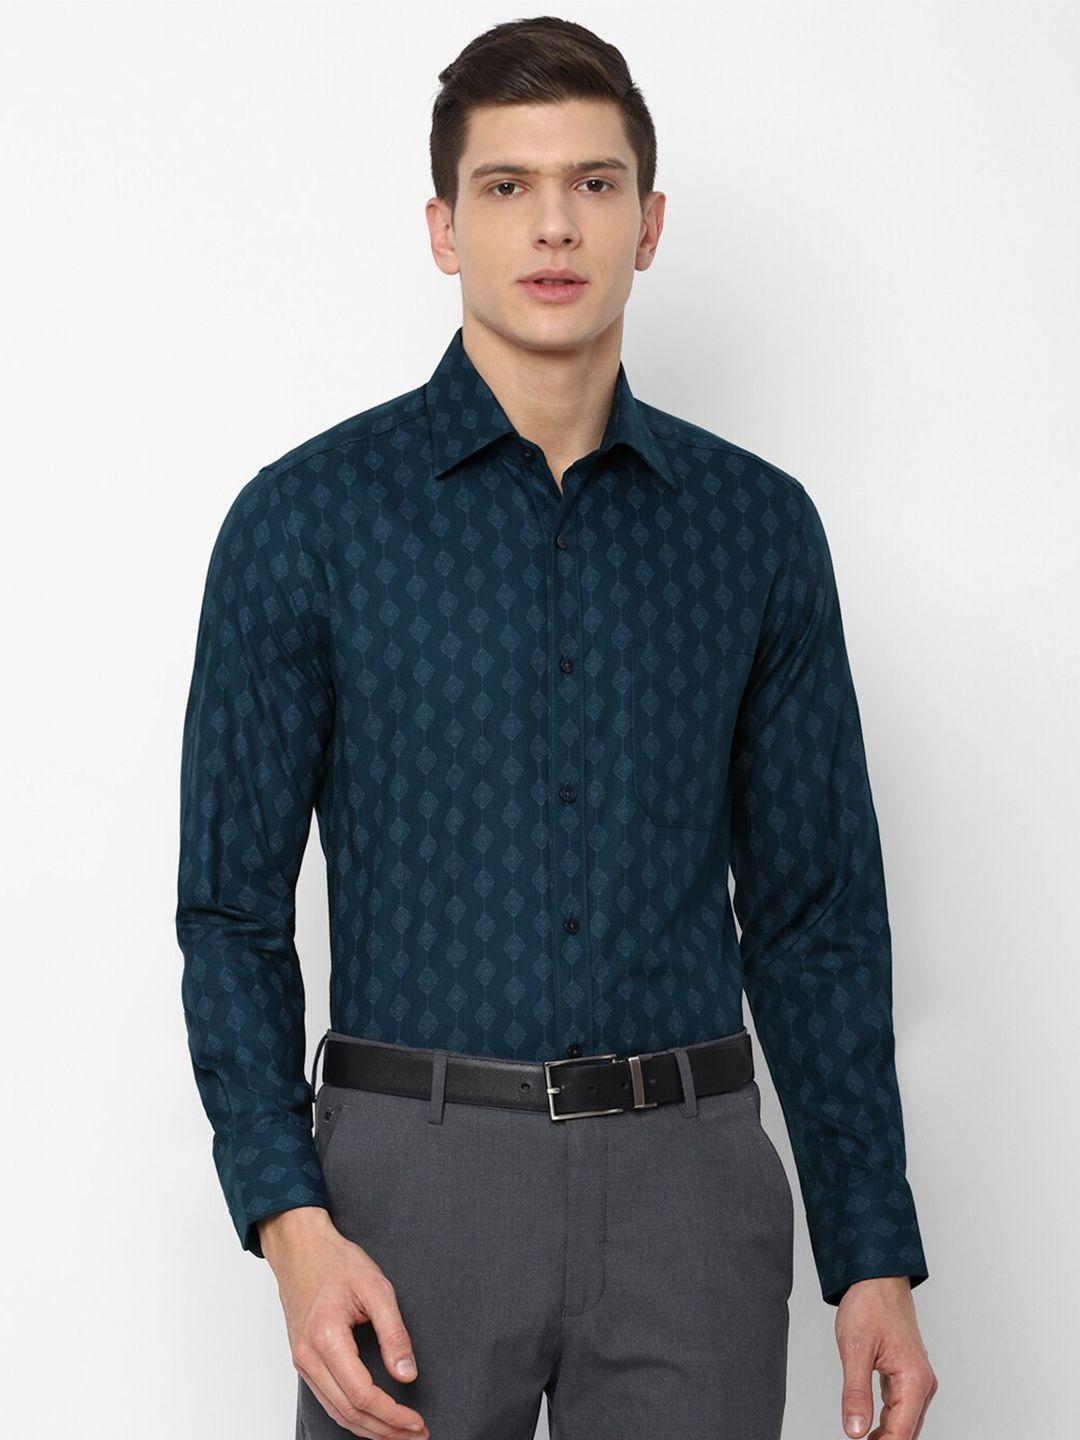 louis philippe men navy blue ethnic motifs printed pure cotton formal shirt